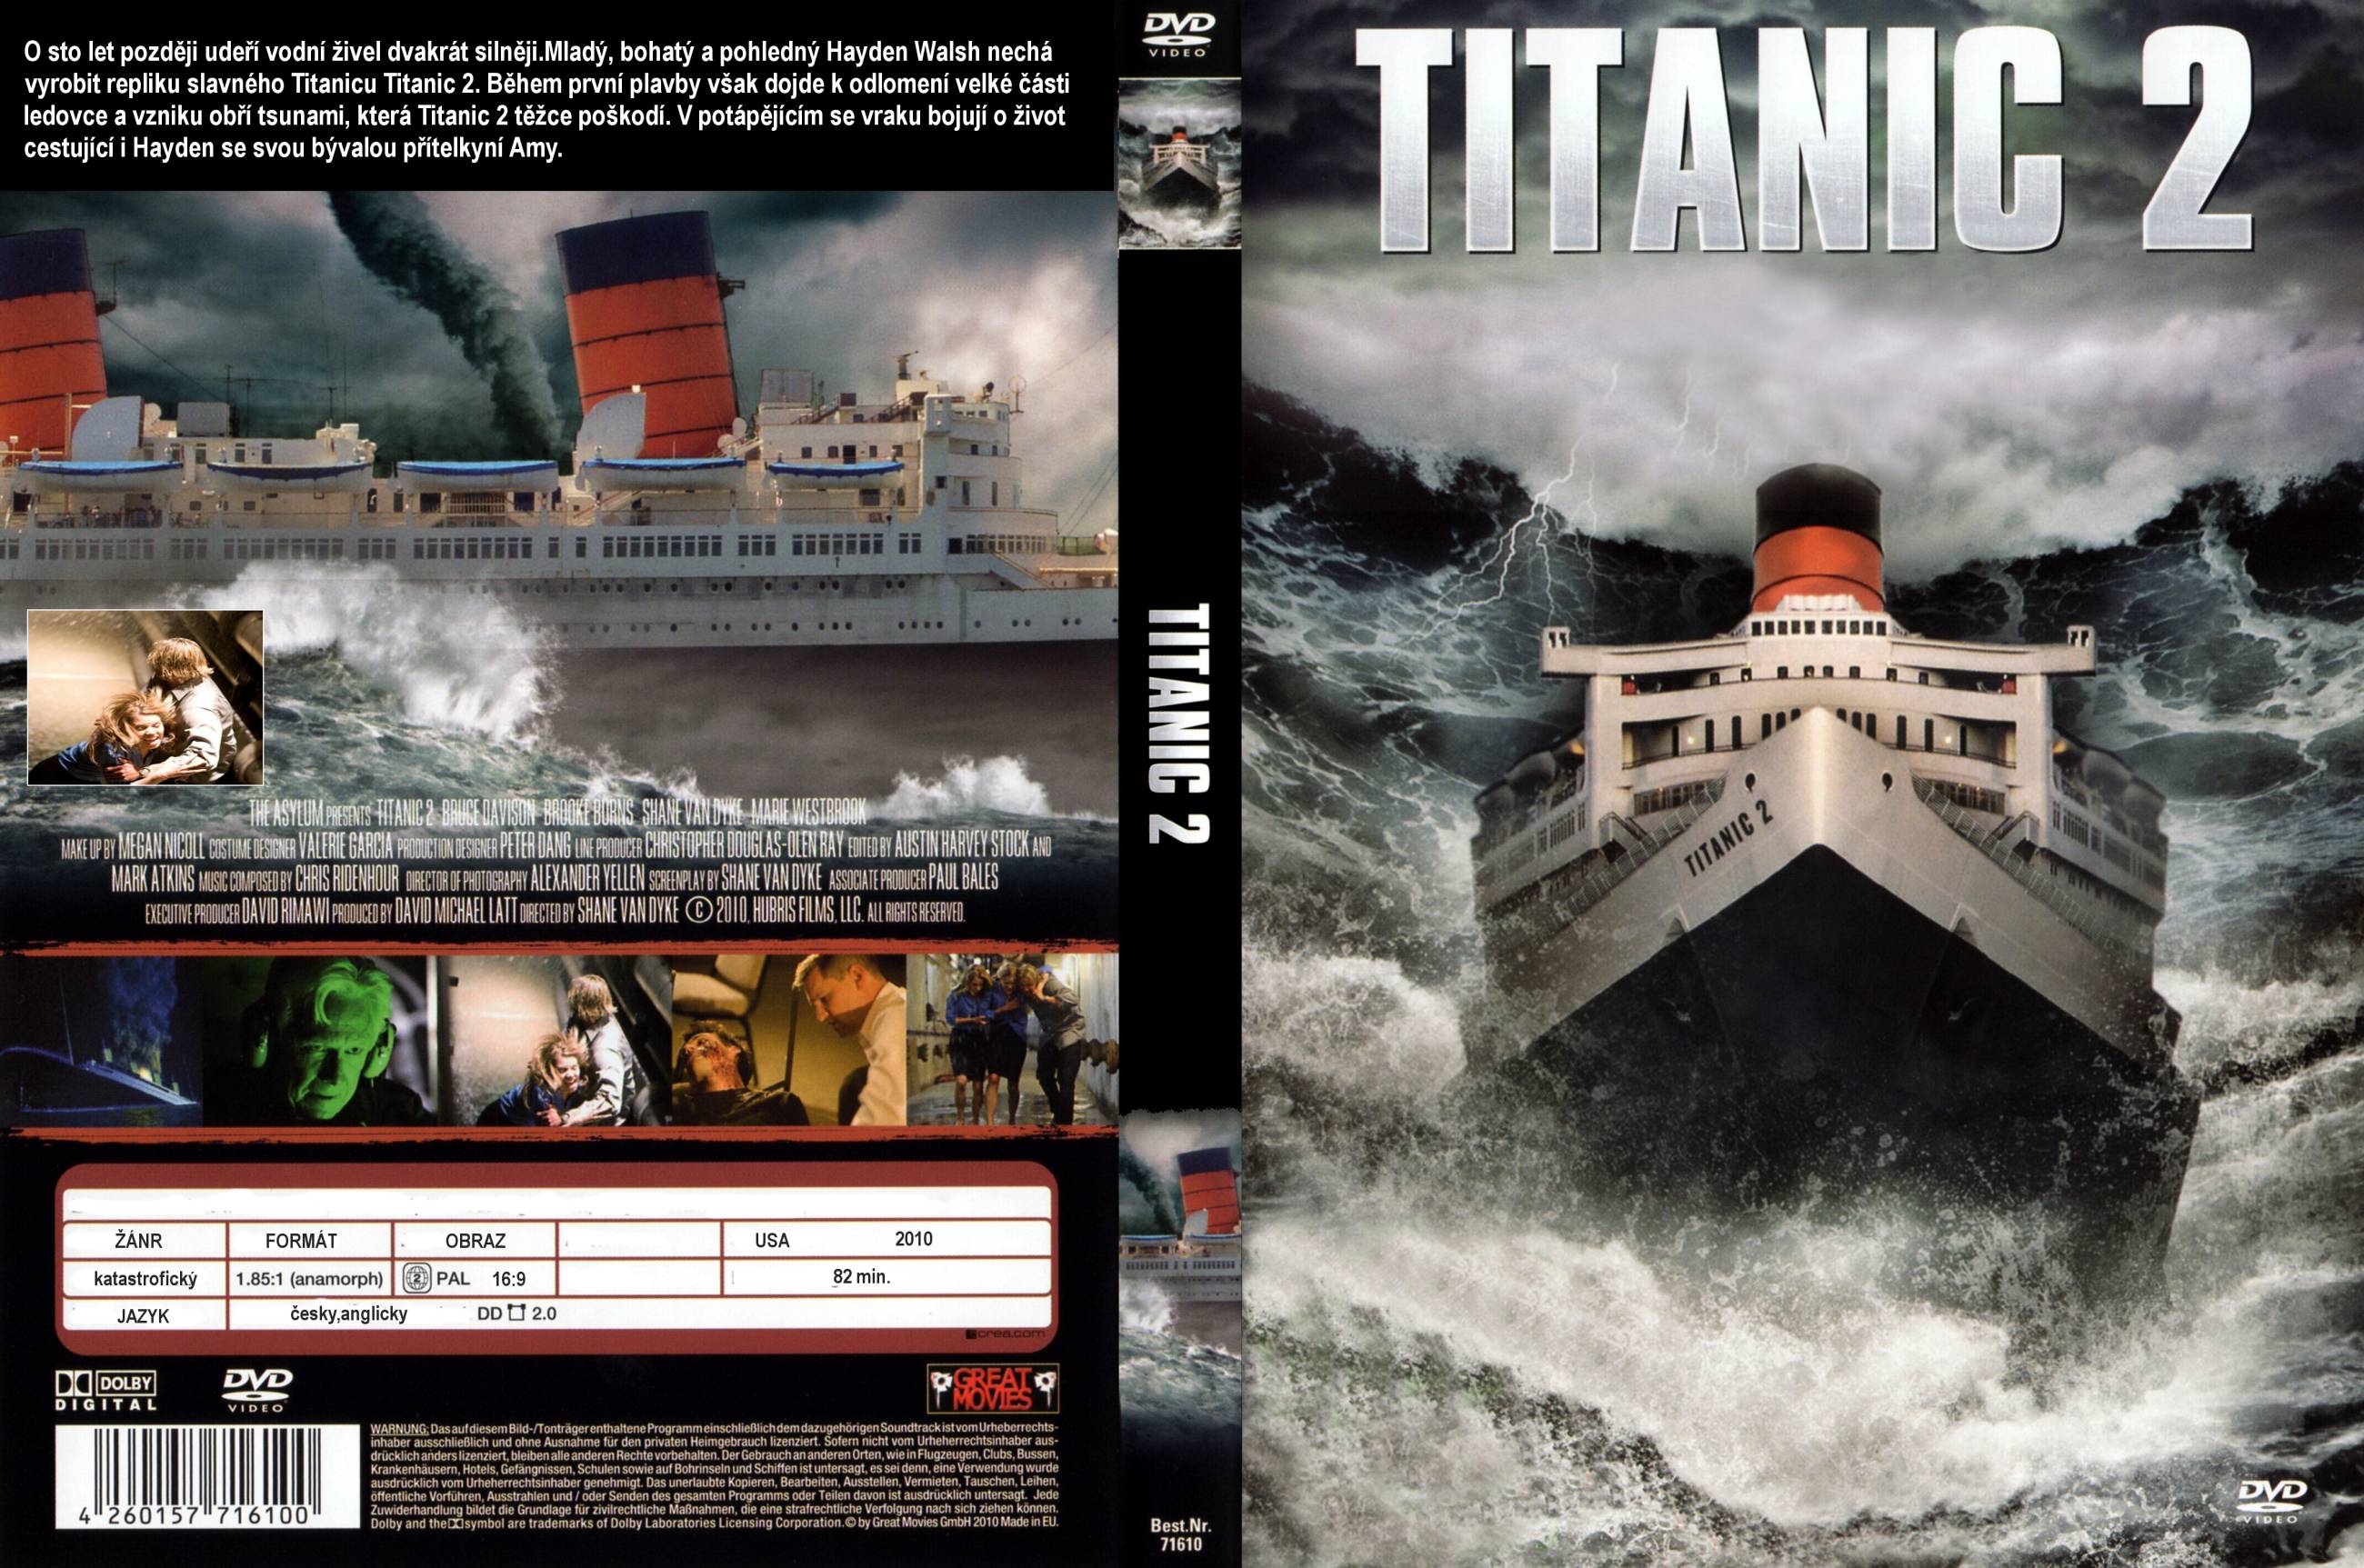 Titanic 2 two the surface dvd, Tamil telugu mp4 movies